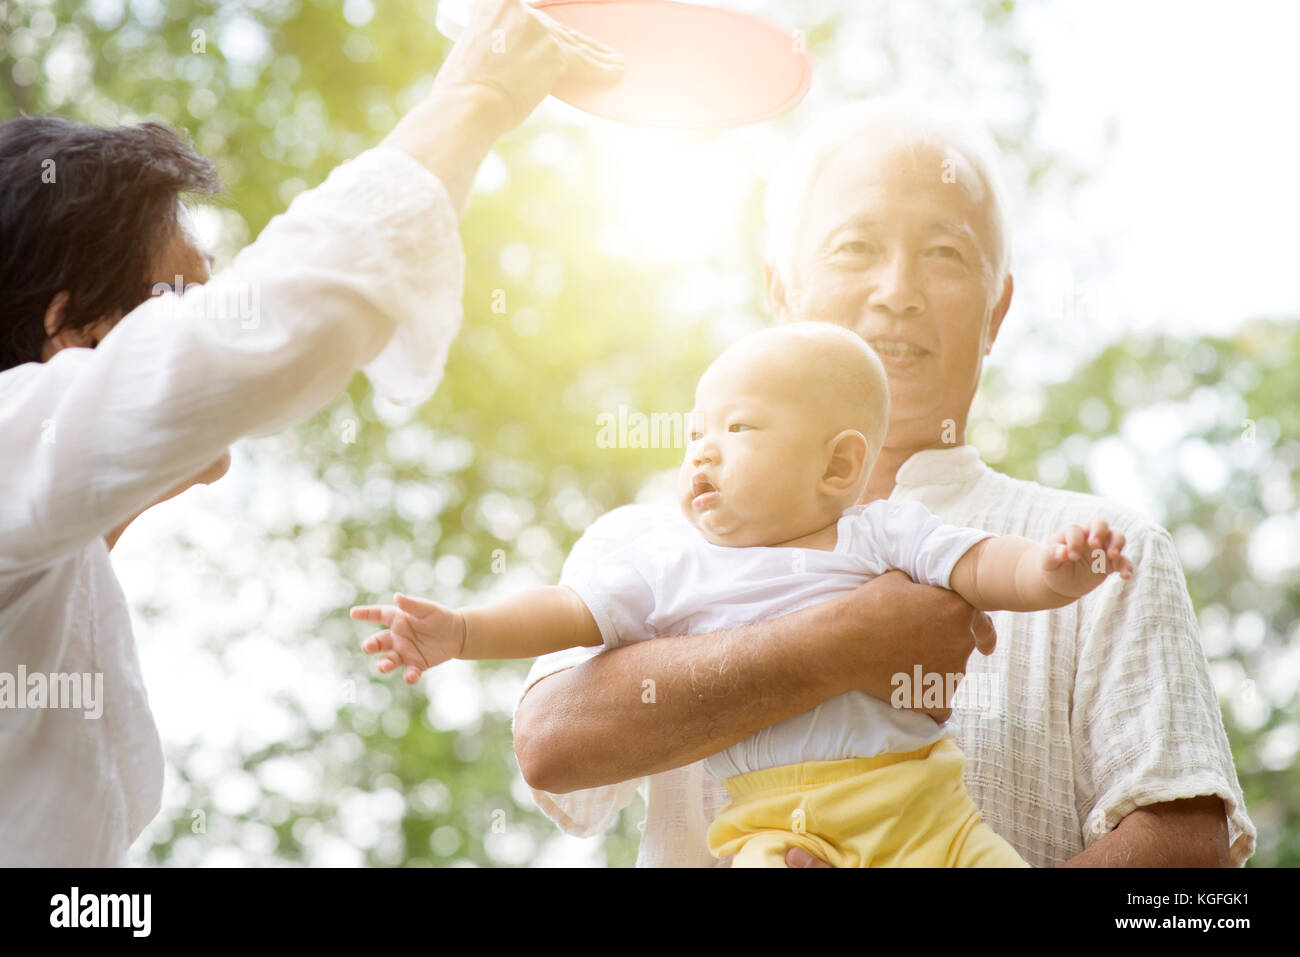 Großeltern kümmert sich um Baby Enkelkind in outdoor Park. asiatische Familie, Lebens- Konzept. Stockfoto